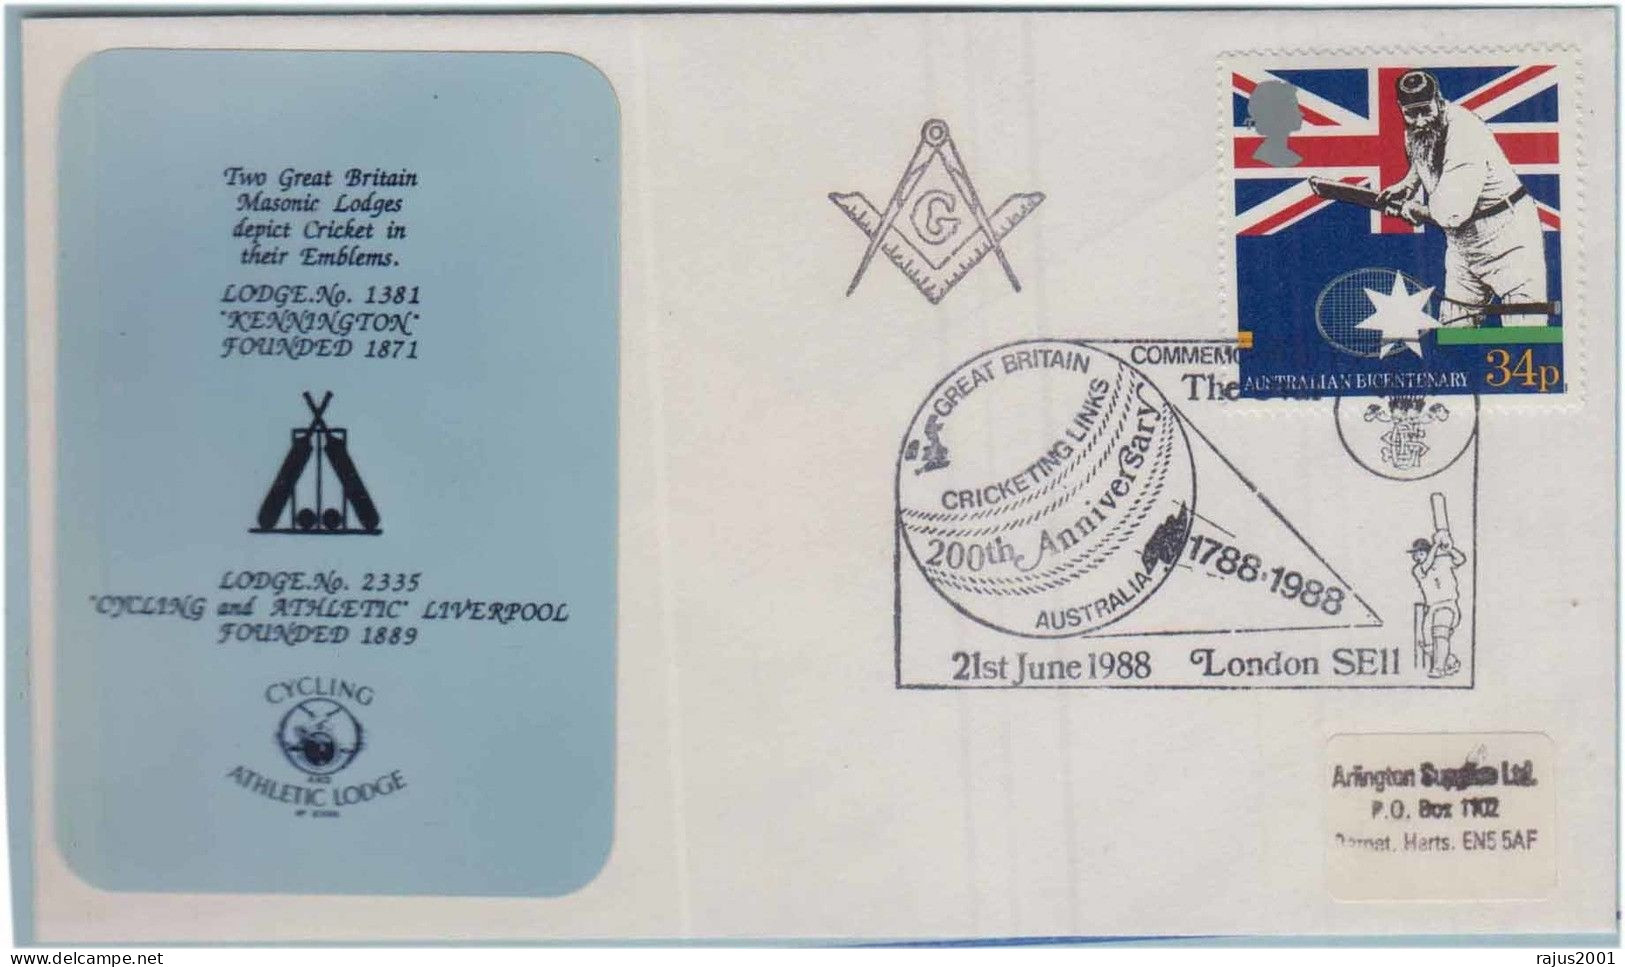 Kennington Lodge No 1381, Cycling And Athletic Lodge No 2335, Cricket Match Ball Bat Freemasonry Masonic Britain Cover - Vrijmetselarij